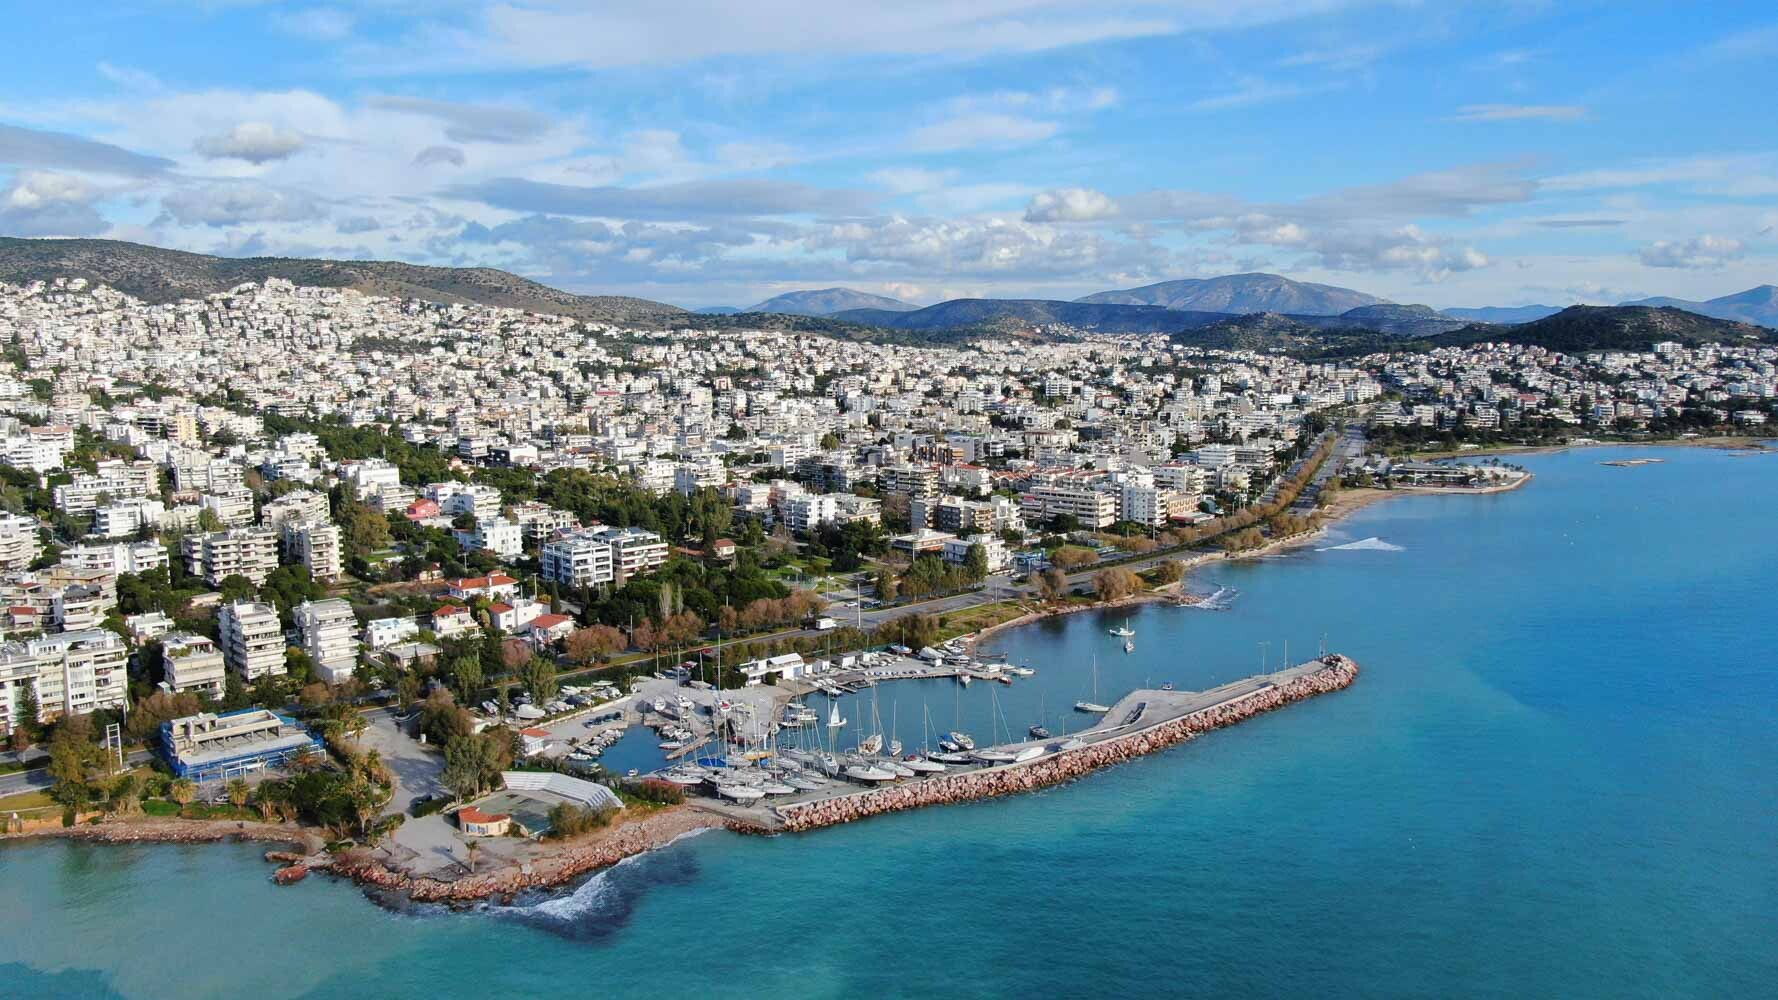 More information about "Η Αθηναϊκή Ριβιέρα ξεπερνά για πρώτη φορά τη Μύκονο στη ζήτηση ακινήτων"